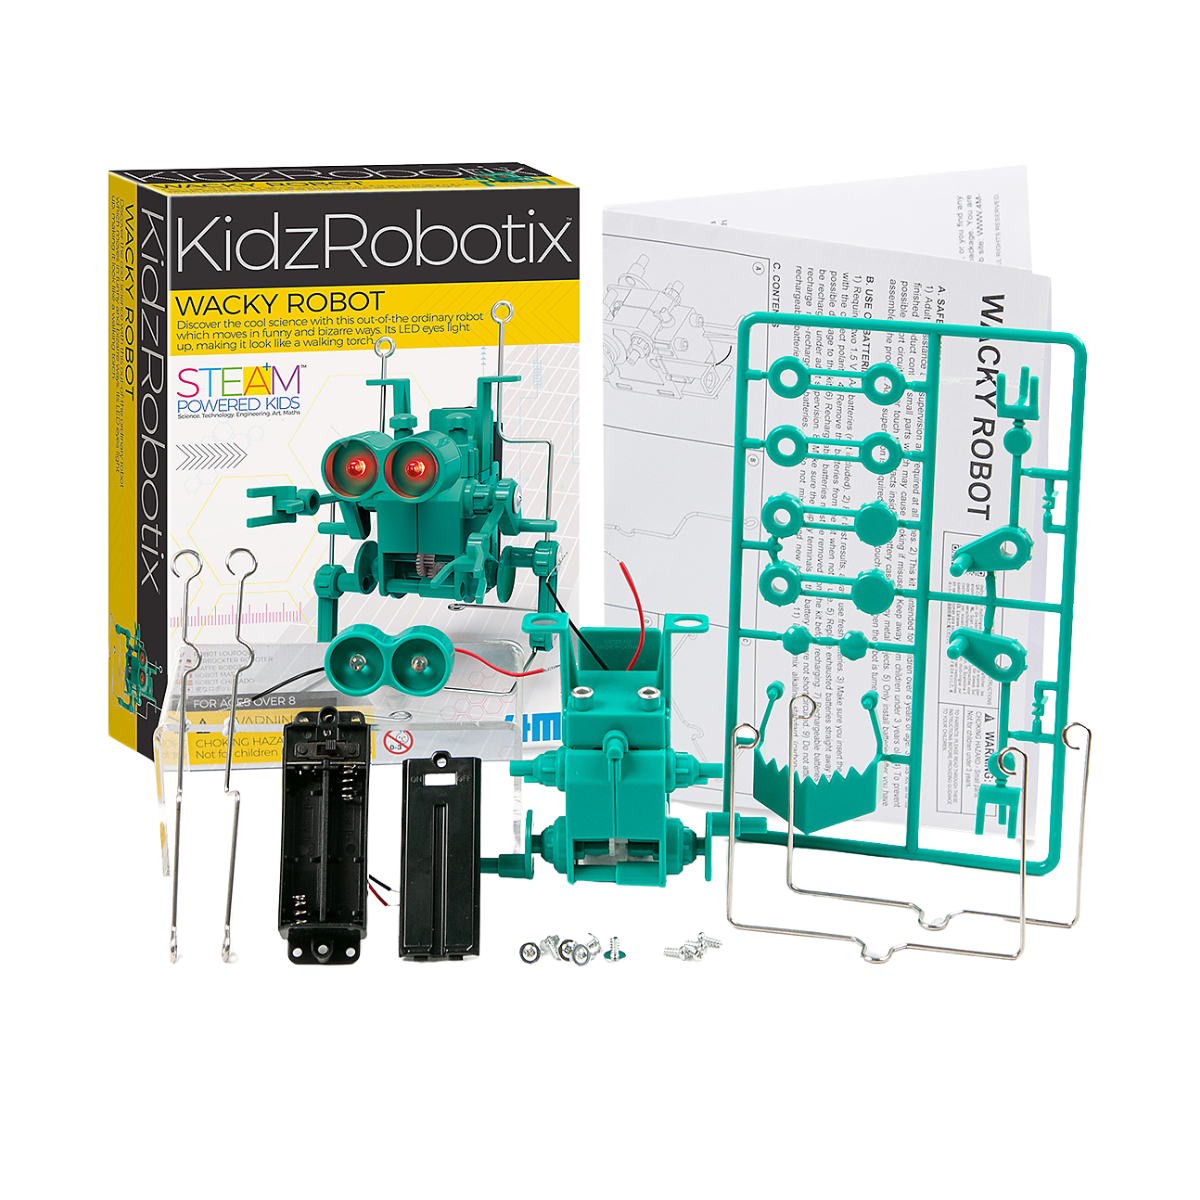 Wacky Robot Kids Robotix